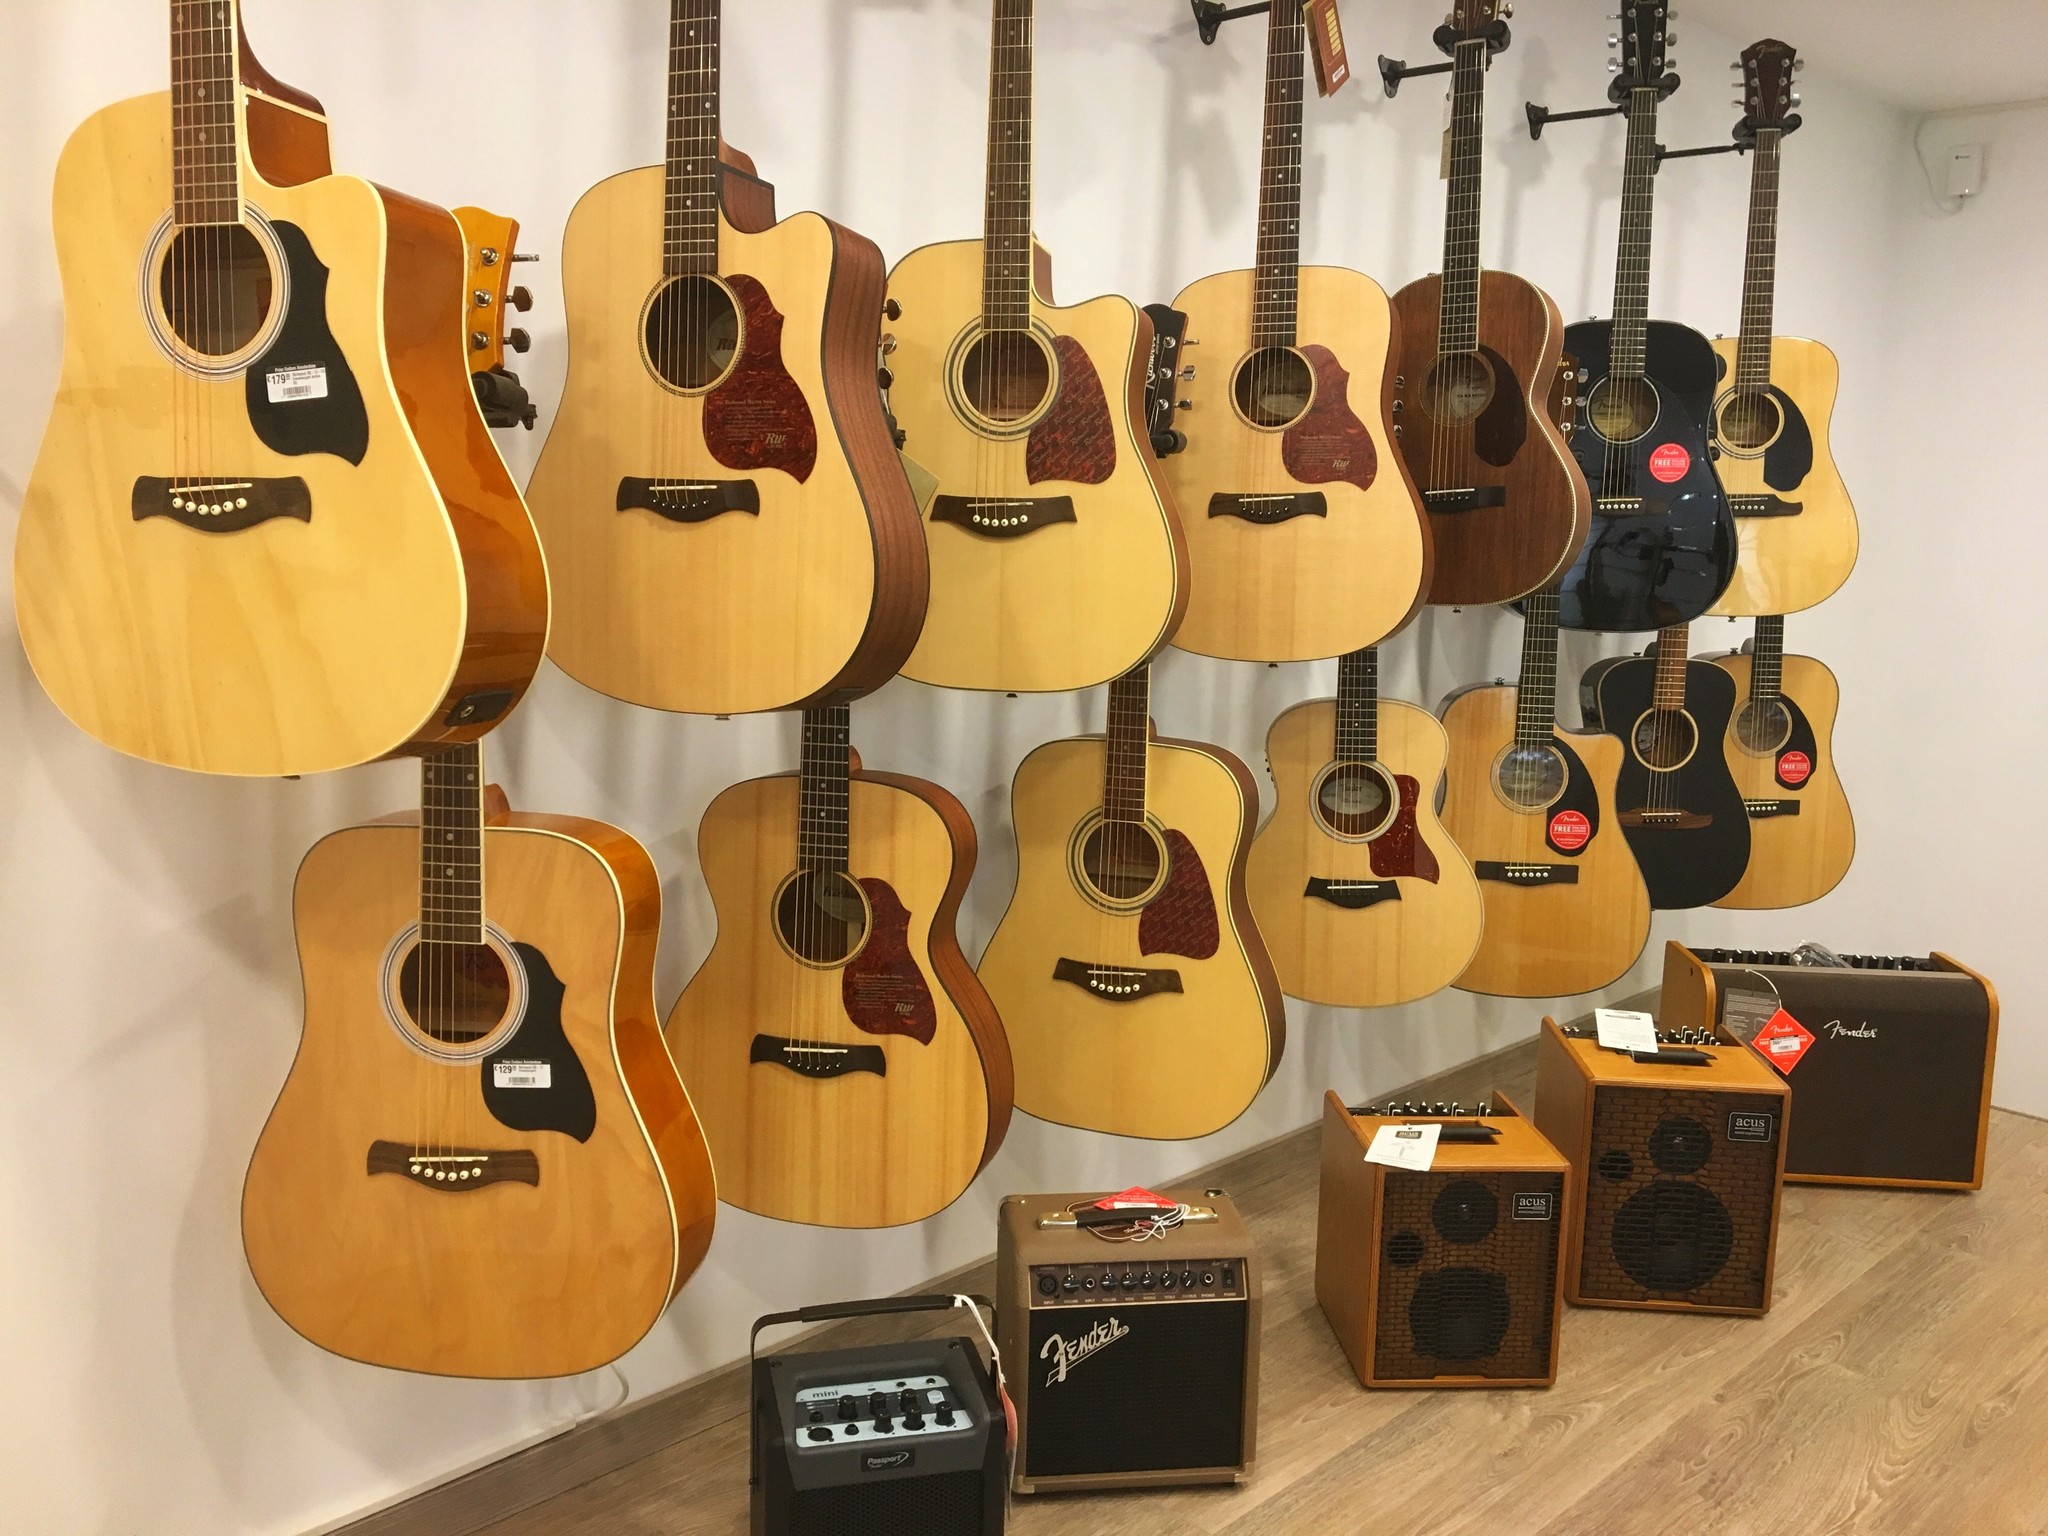 enthousiast Oxide evenwicht Onze winkel - Prinz Guitars Amsterdam